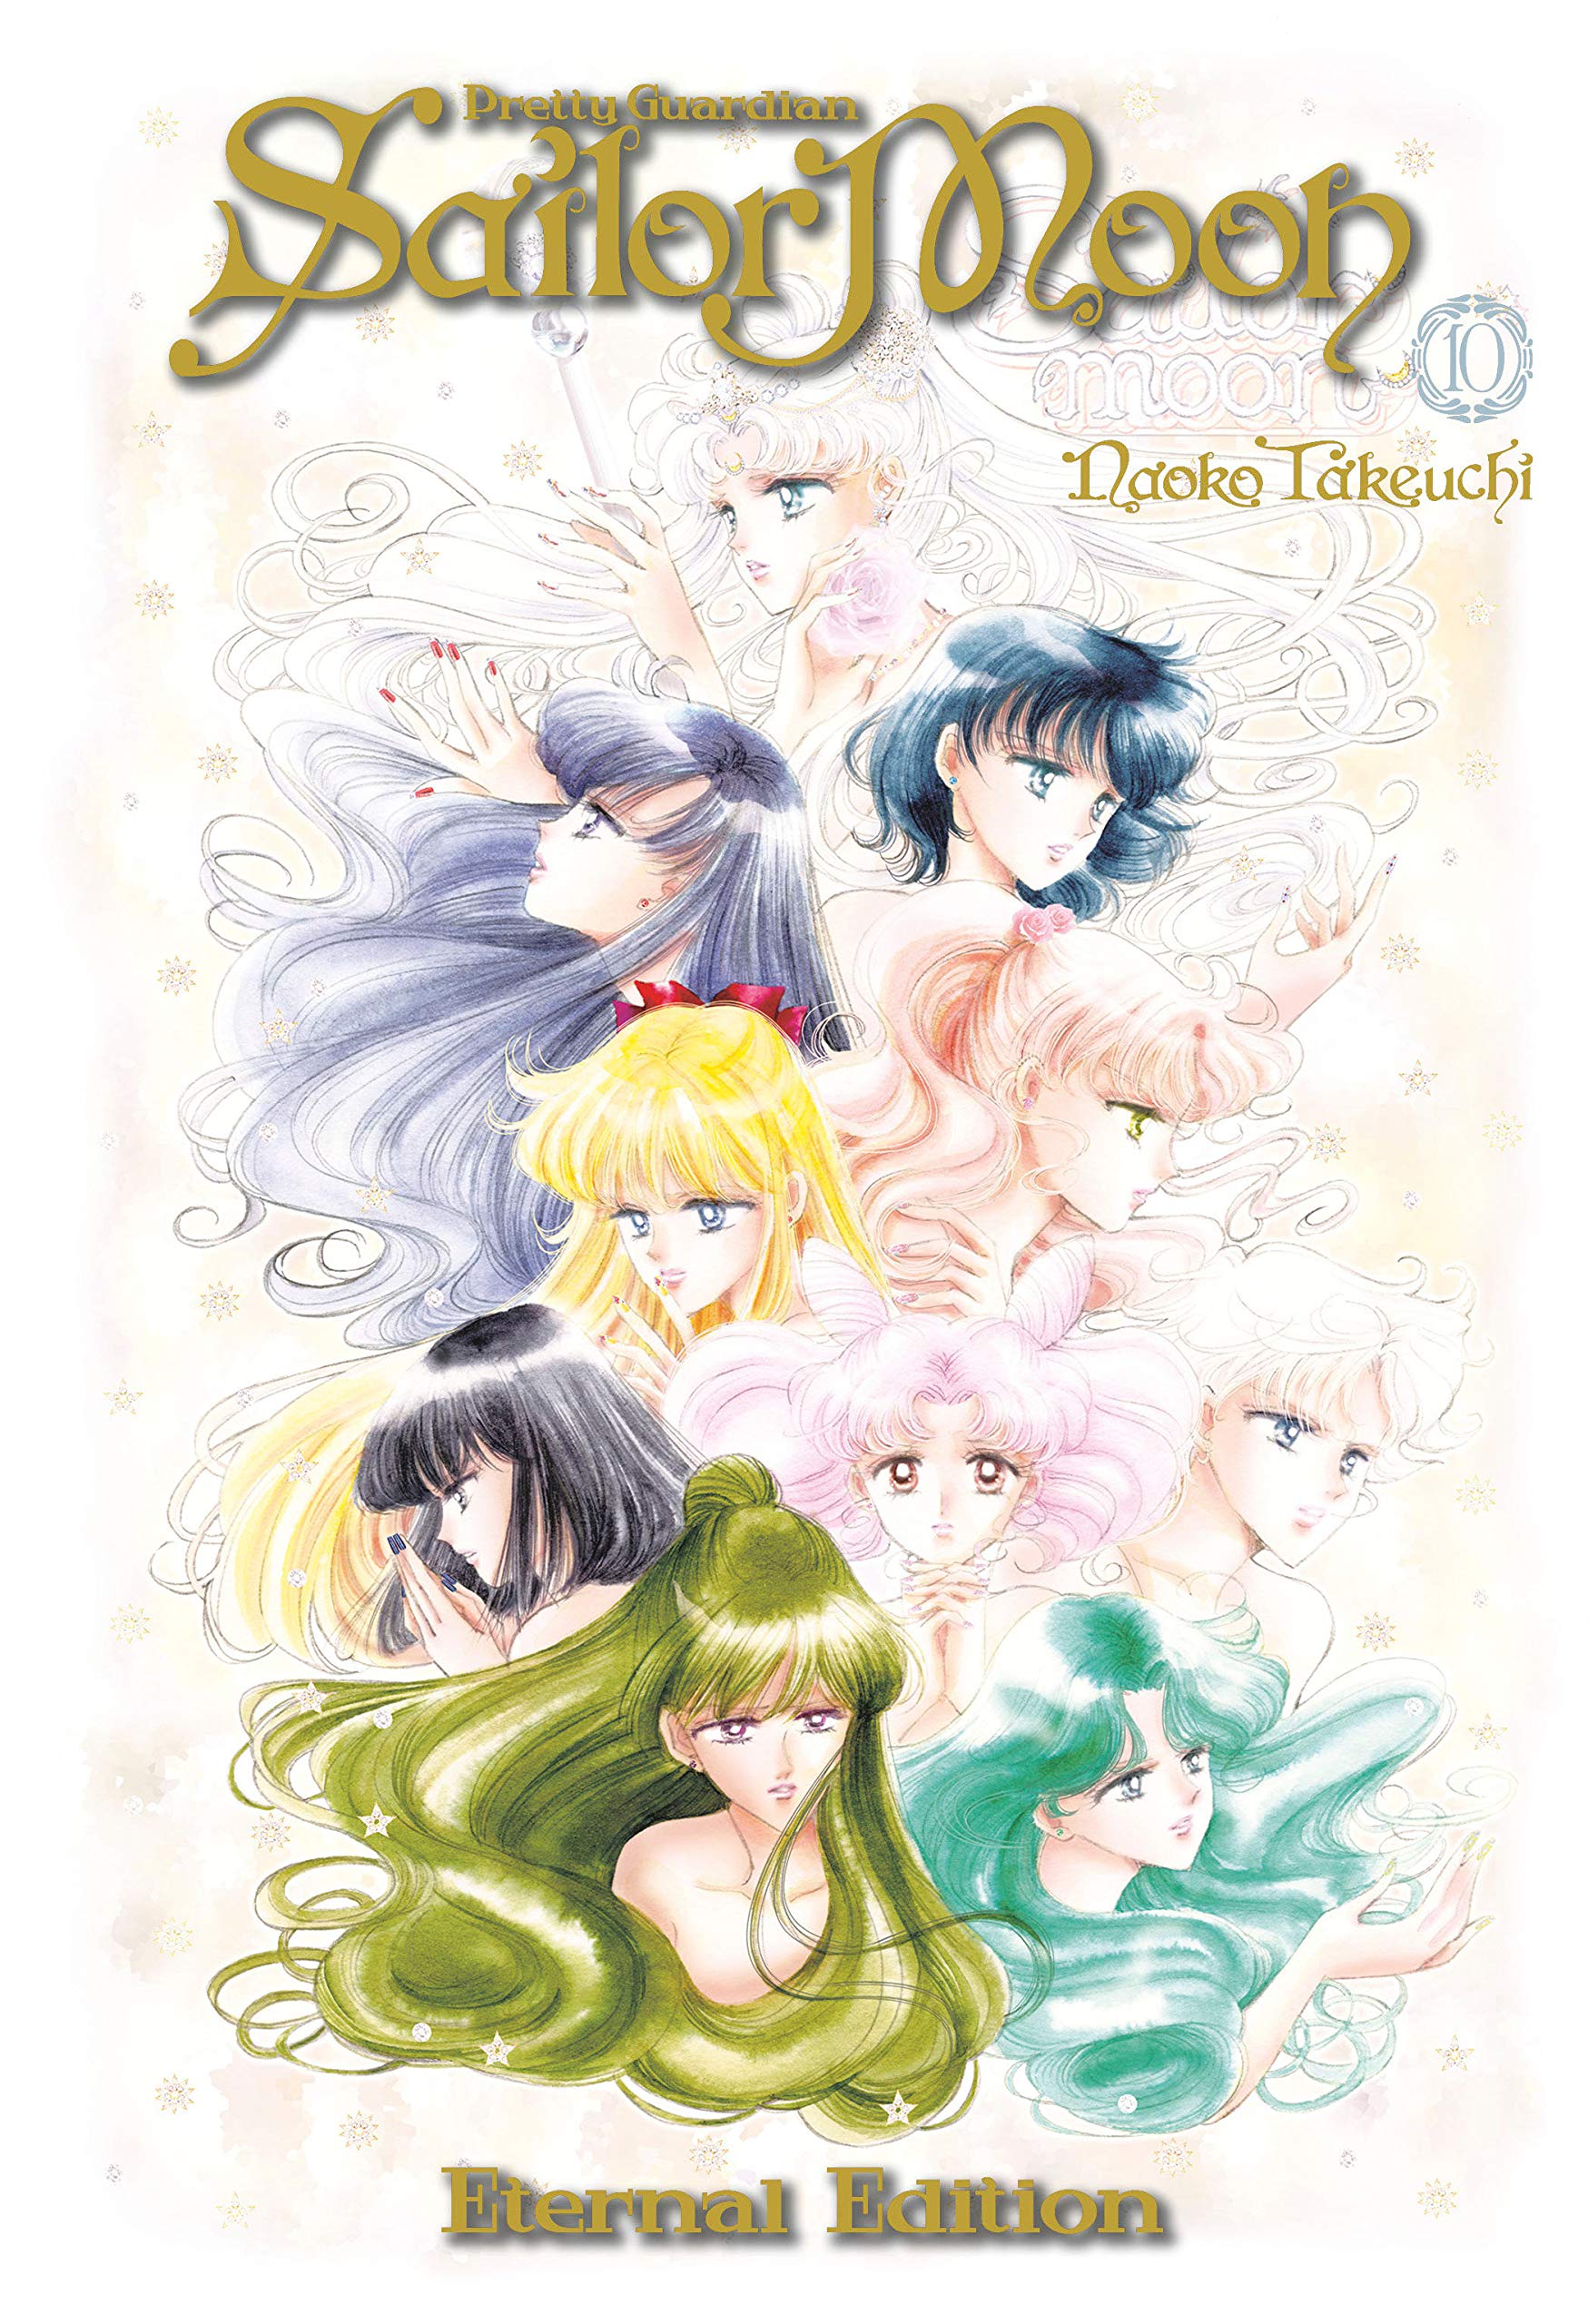 Vezi detalii pentru Pretty Guardian Sailor Moon: Eternal Edition - Volume 10 | Naoko Takeuchi